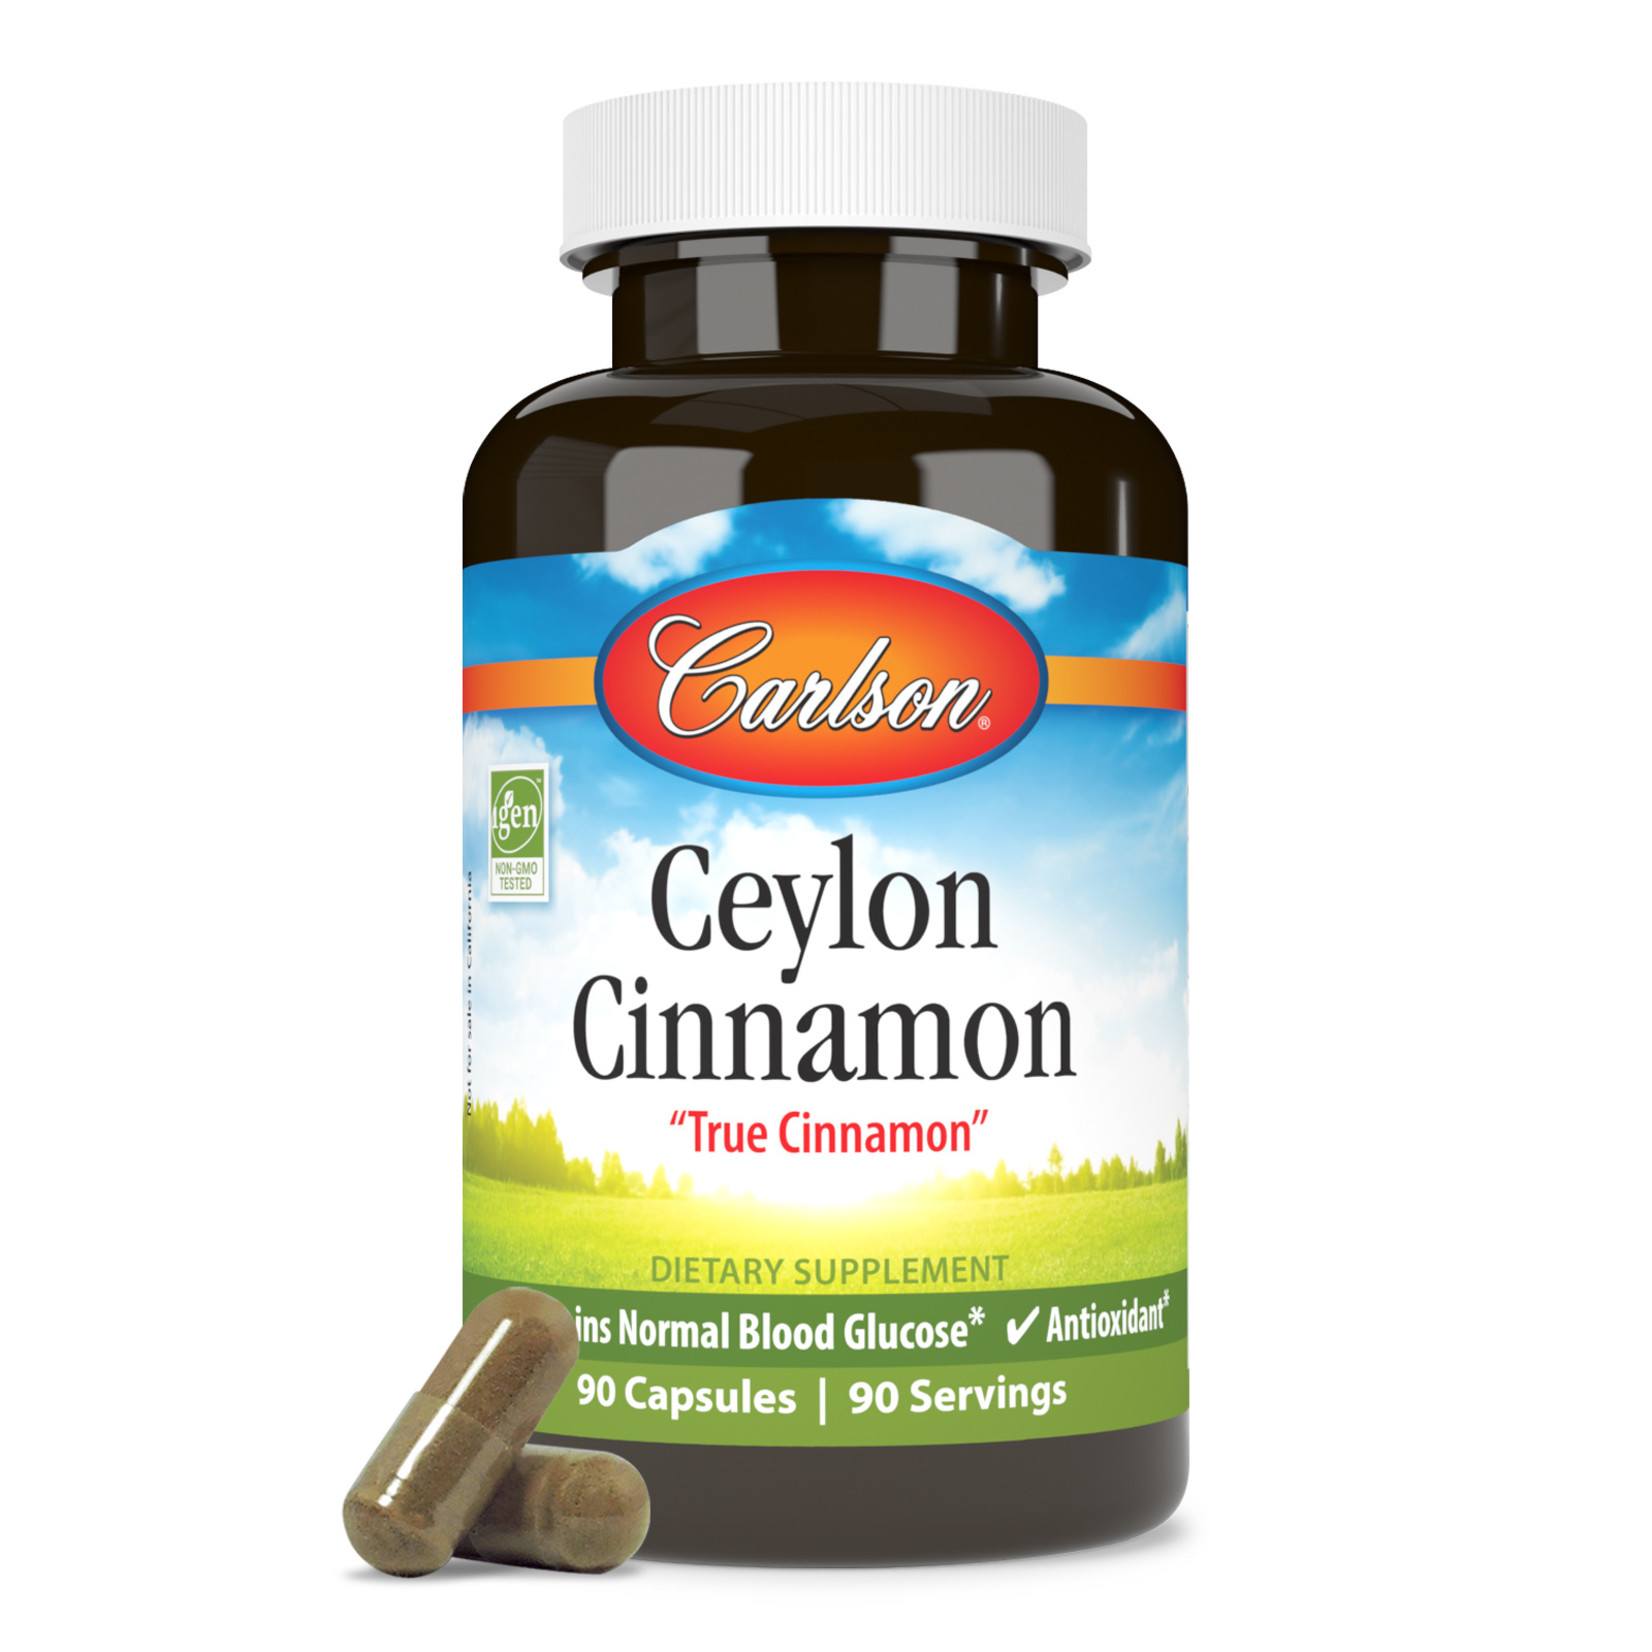 Carlson Carlson - Ceylon Cinnamon - 90 Capsules